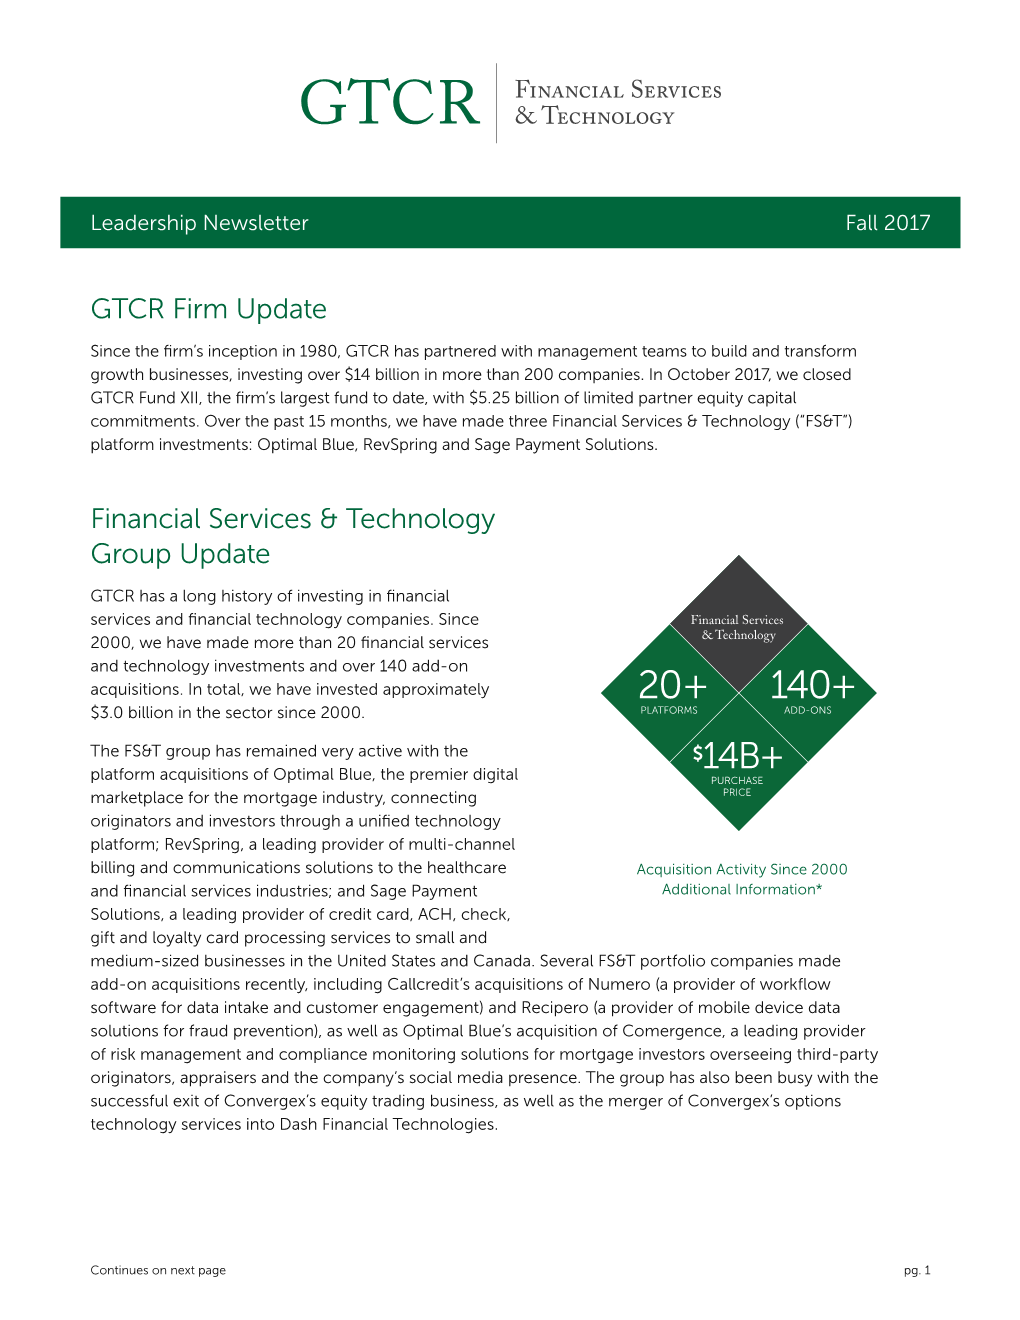 GTCR Firm Update Financial Services & Technology Group Update